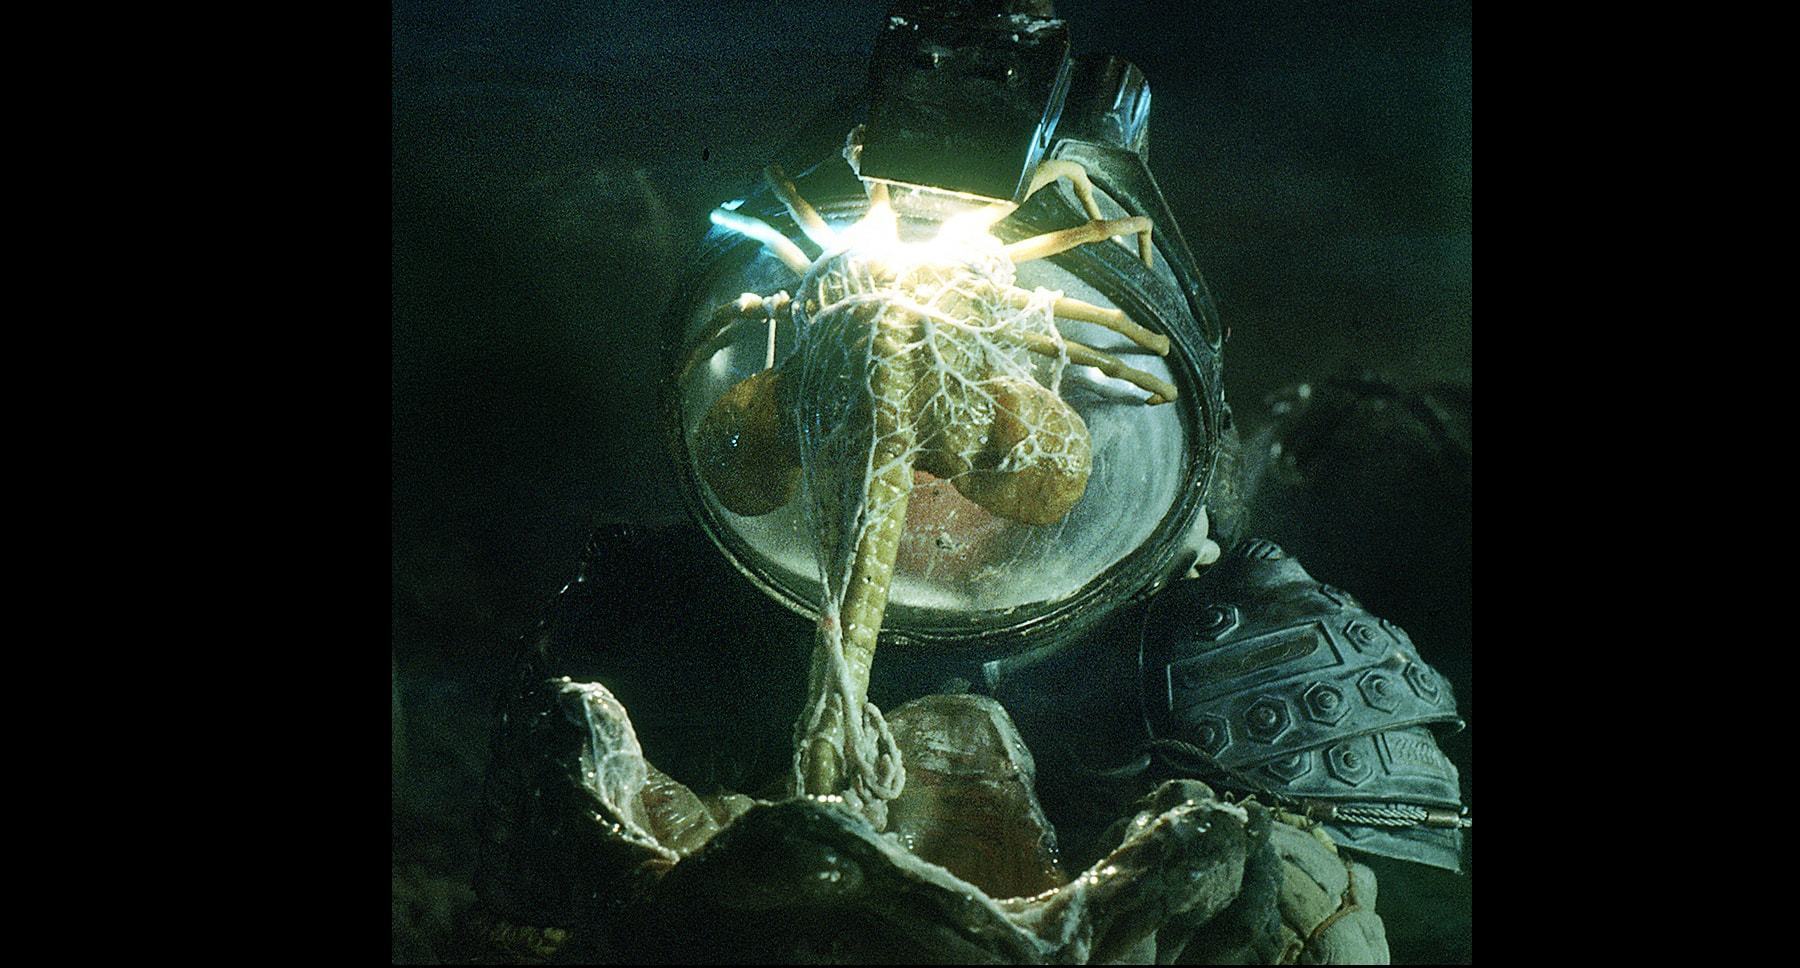 Face Hugger Alien attached to a helmet in the film "Alien" 